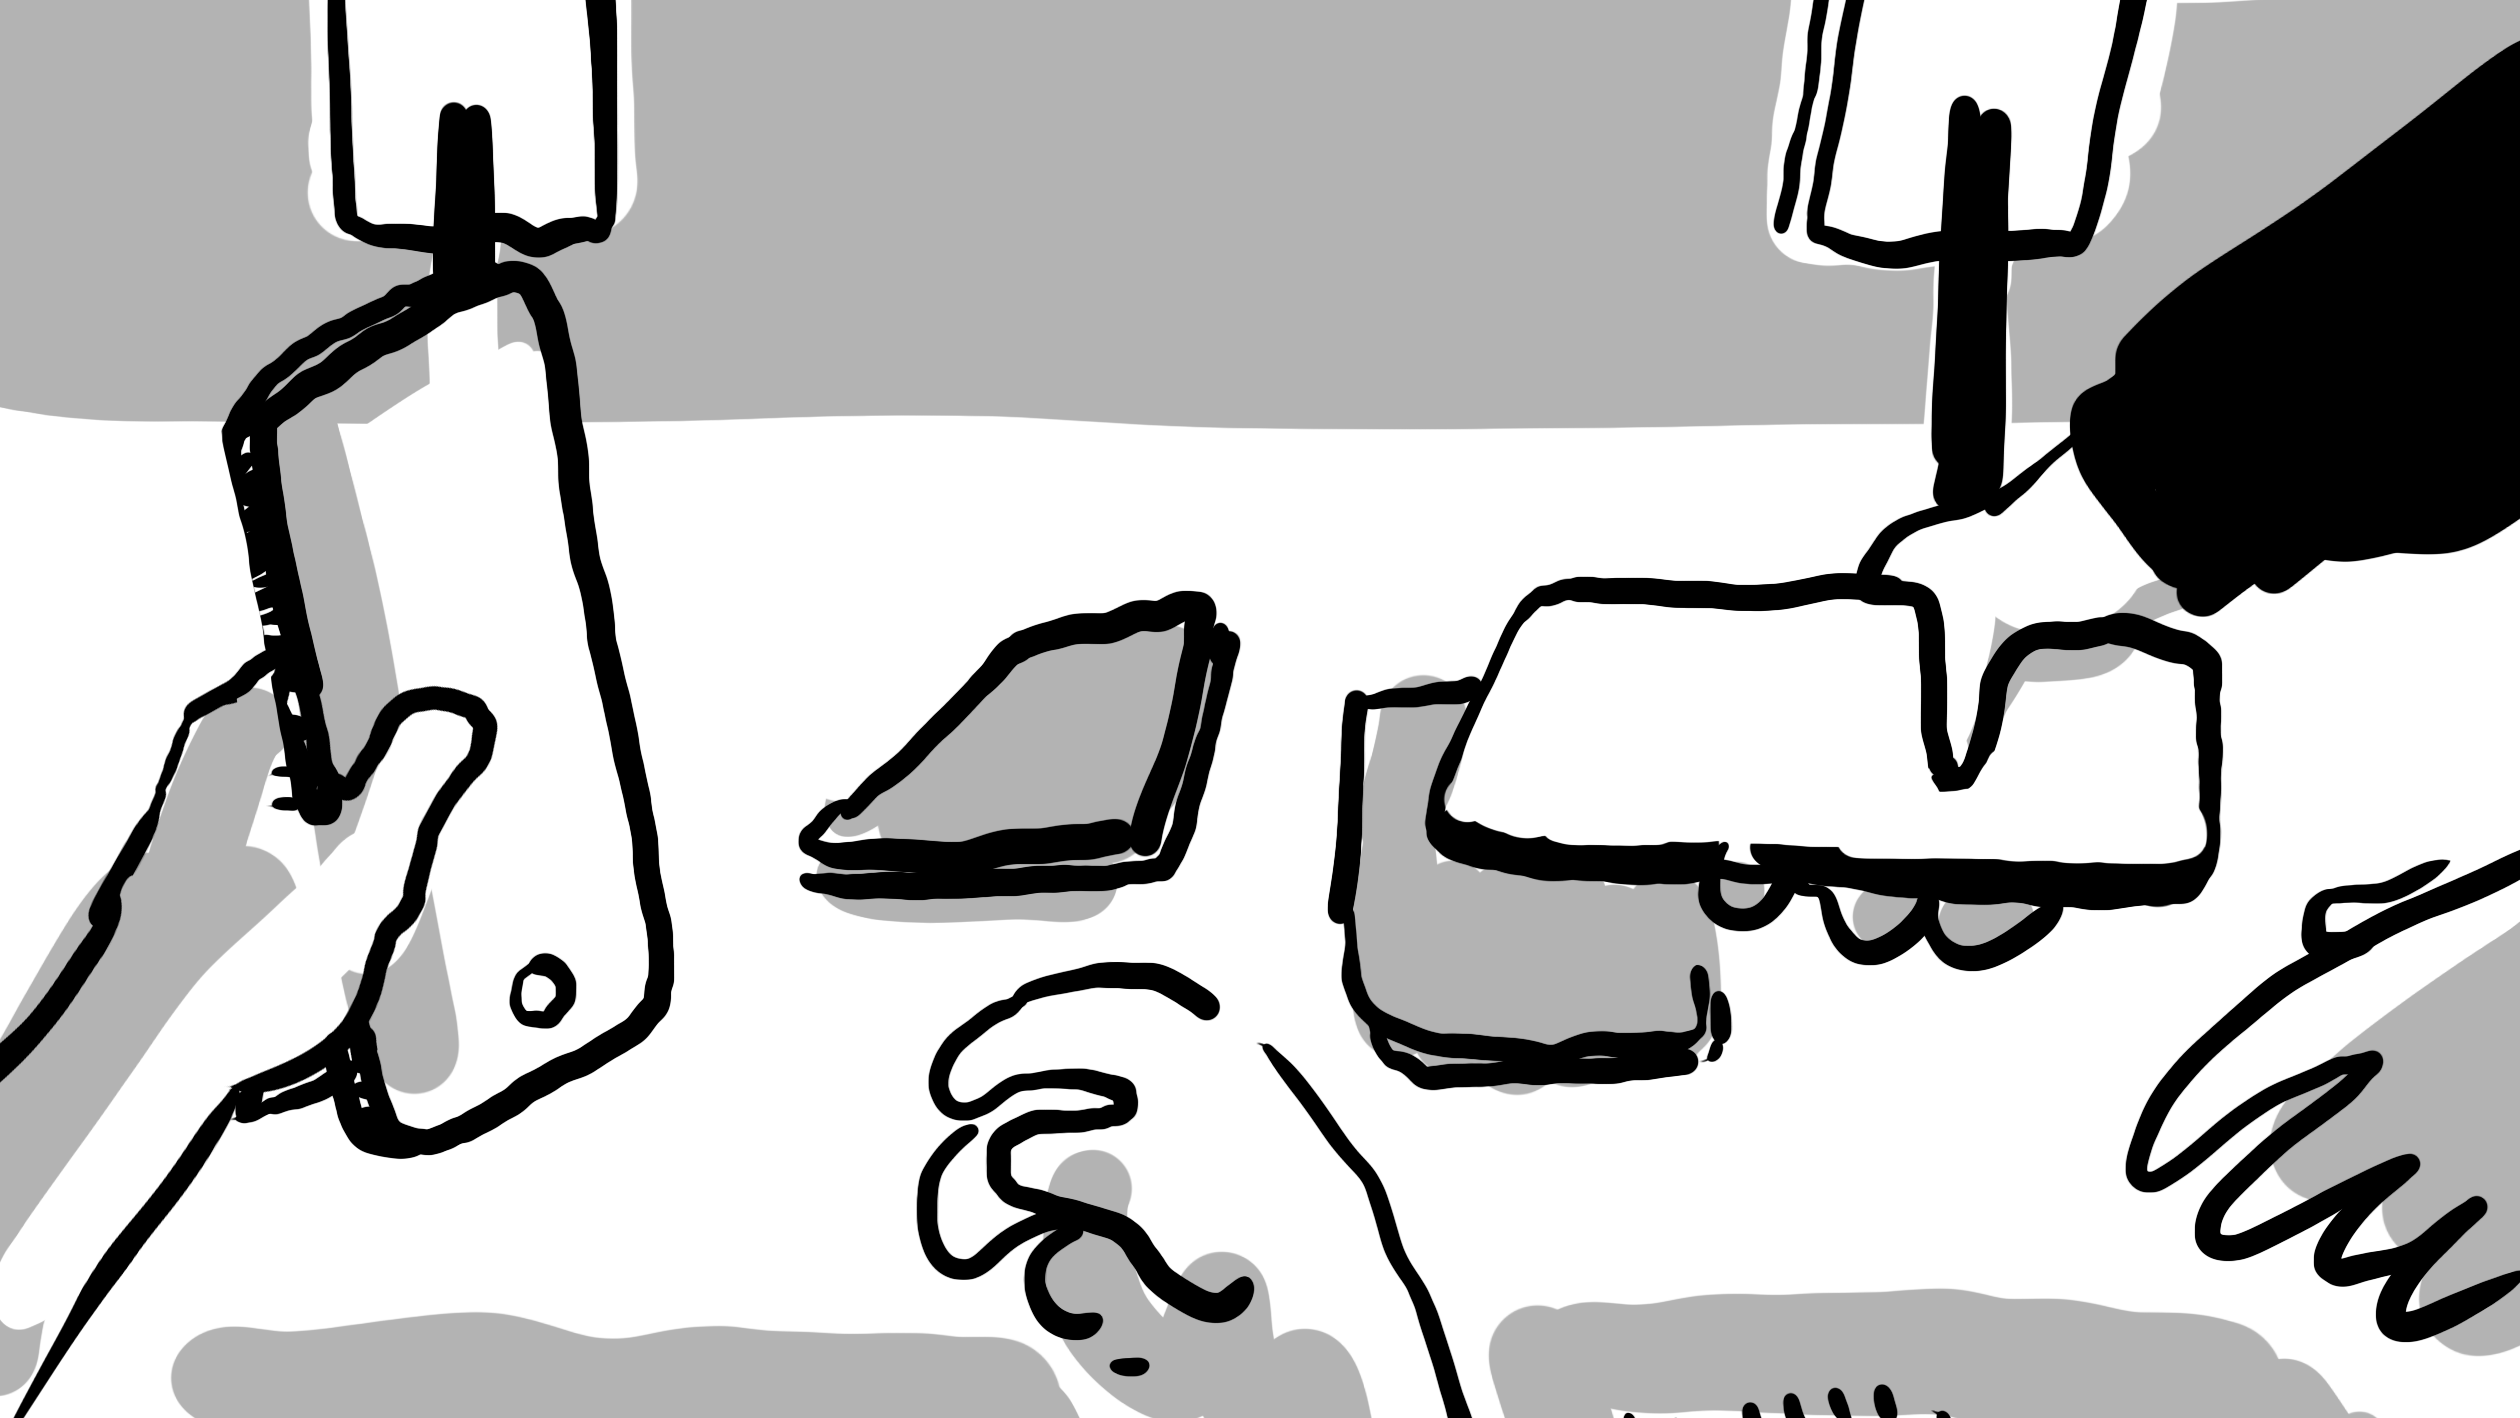 Bild aus Storyboard, Handtisch mit verschiedenen Smartphones